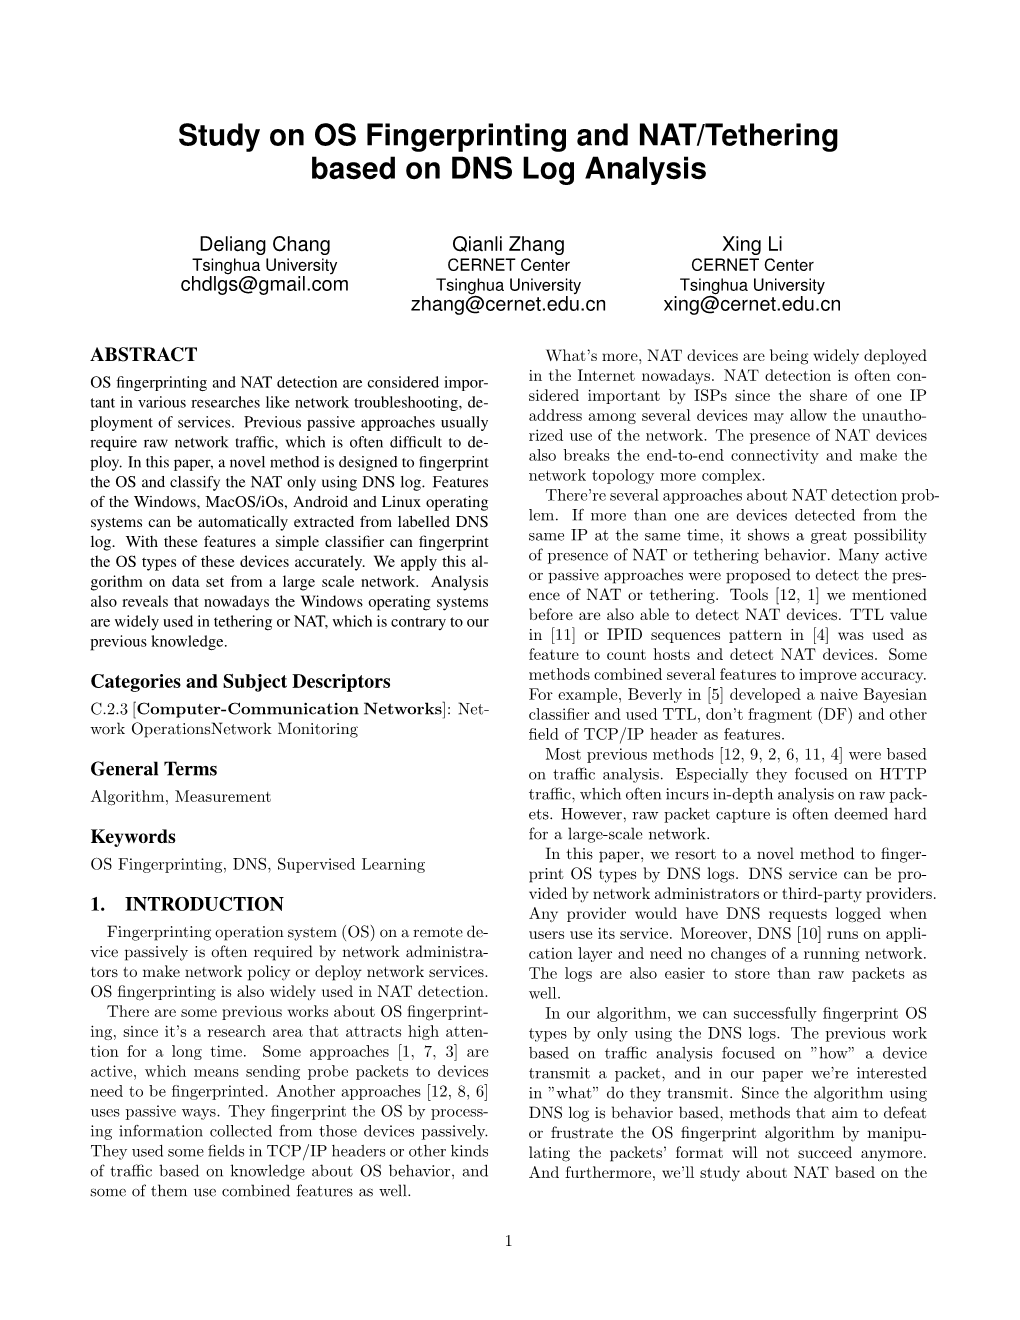 Study on OS Fingerprinting and NAT/Tethering Based on DNS Log Analysis